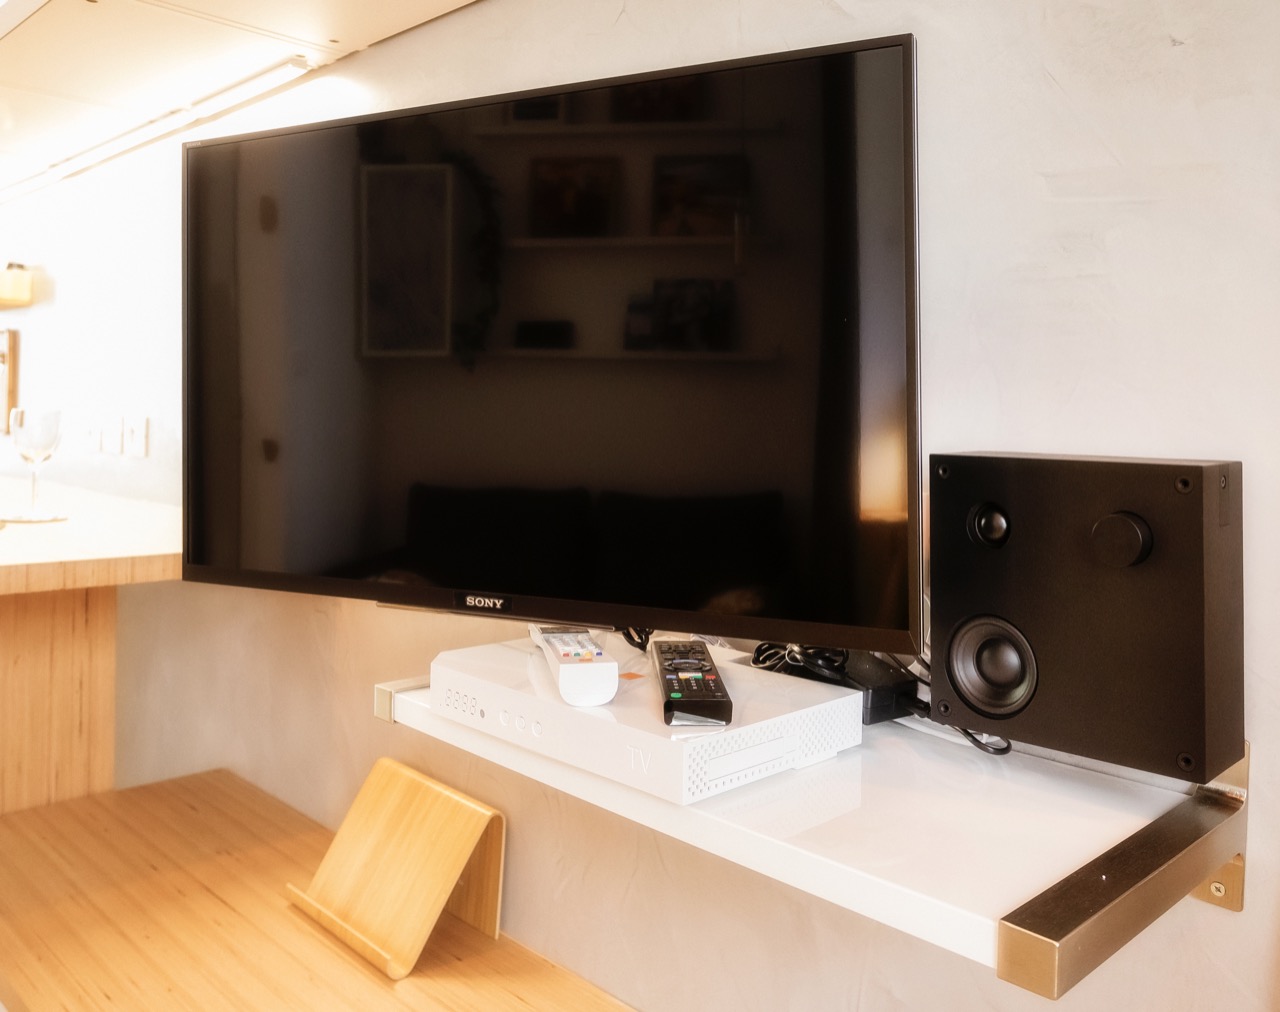 Wifi TV and bluetooth speaker